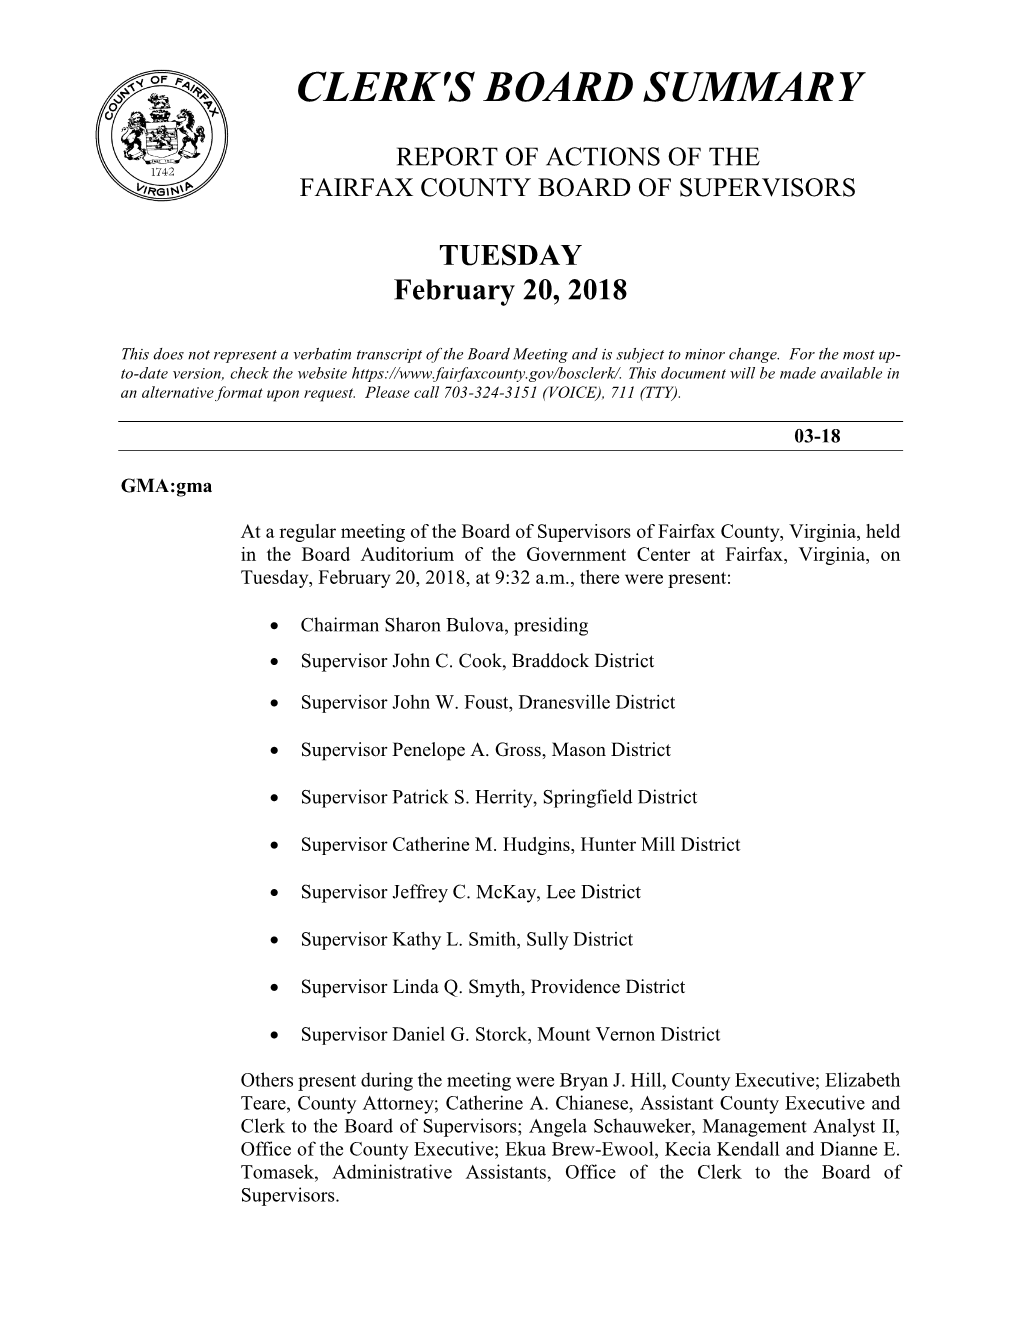 Februrary 20, 2018 Board of Supervisors Meeting